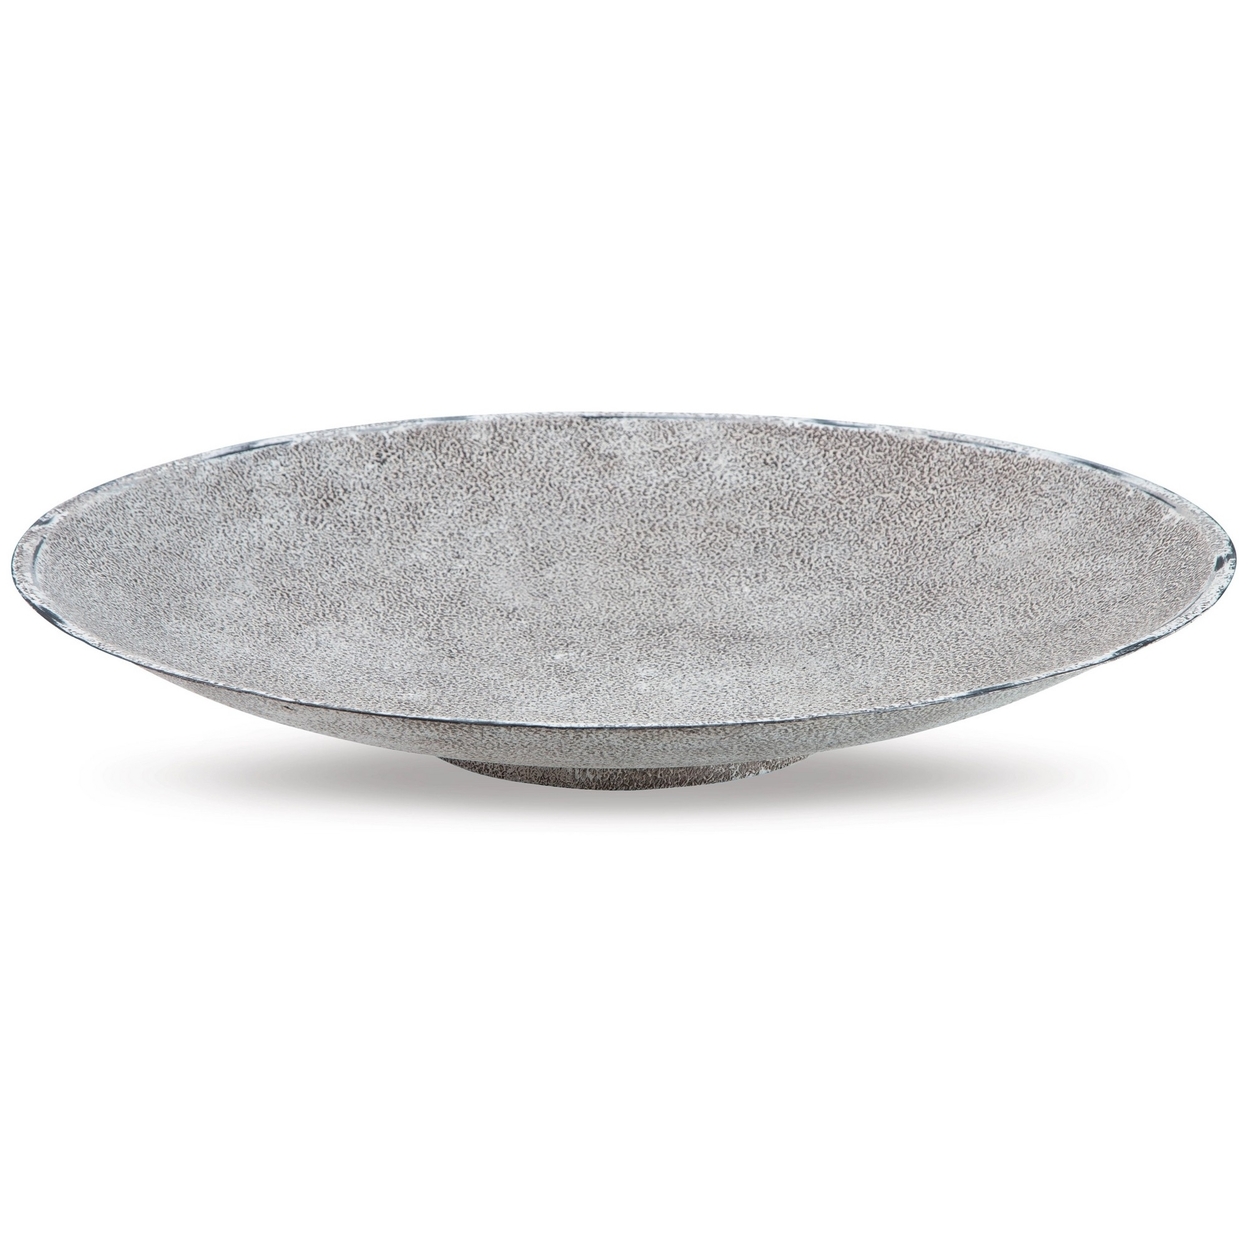 20 Inch Round Decorative Bowl With Vintage White Accent Finish, Gray Metal- Saltoro Sherpi